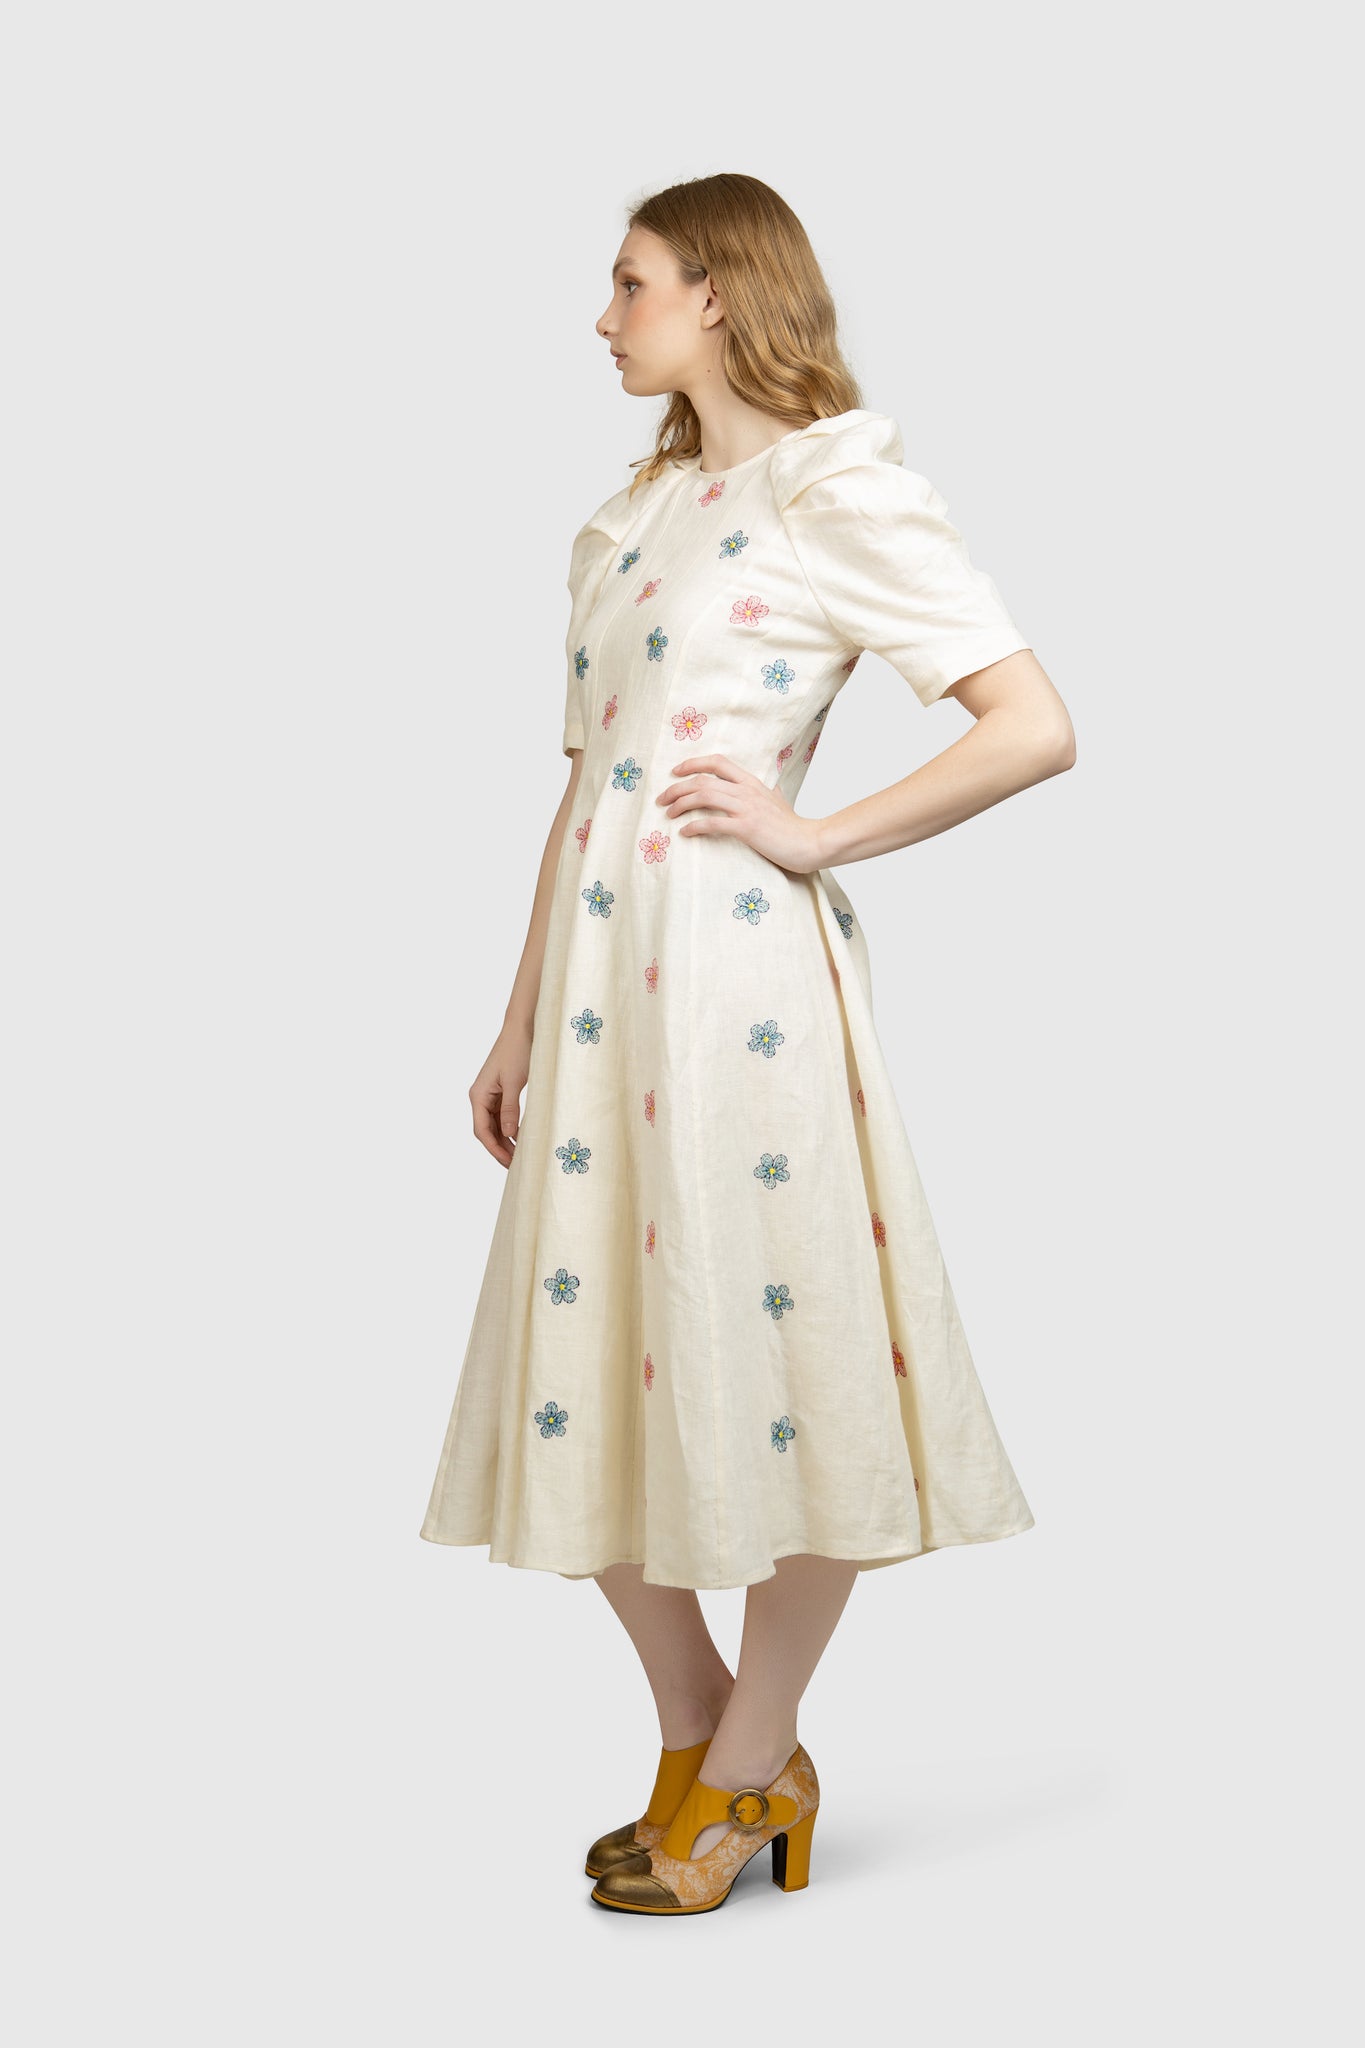 Organic Cotton Embroidered Dress - AGAATI